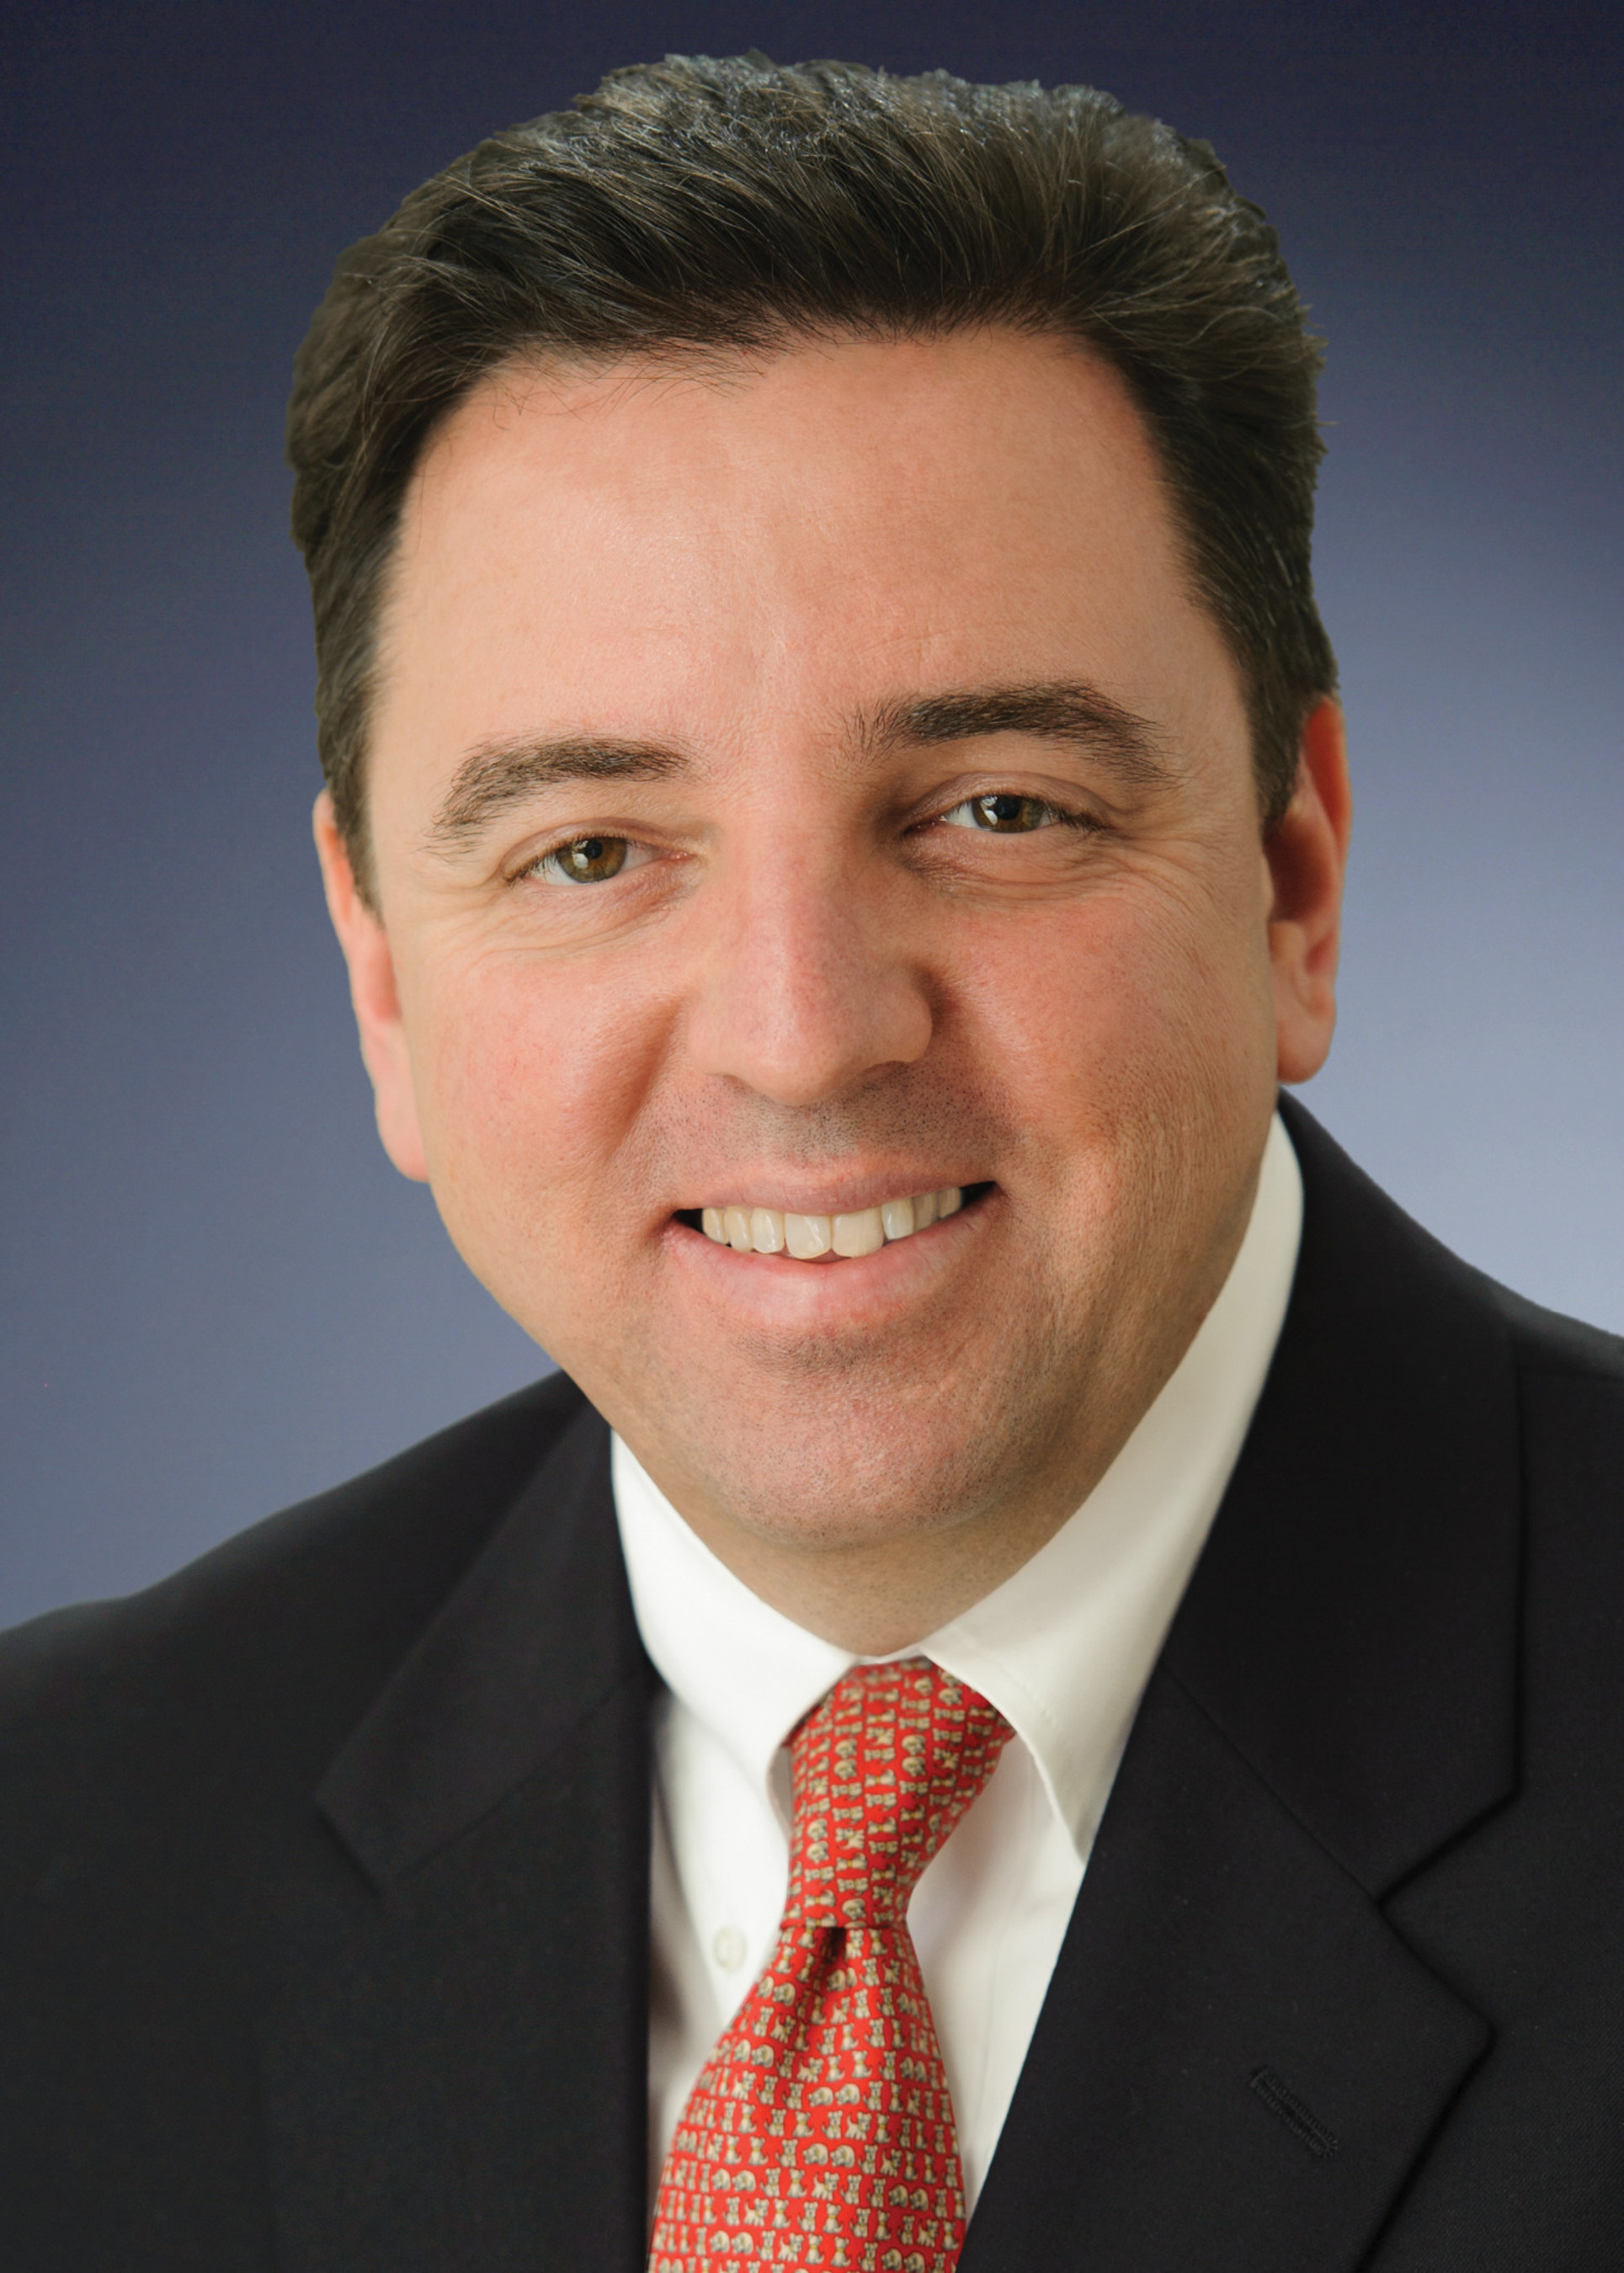 Mark DeFazio, President and CEO of Metropolitan Commercial Bank